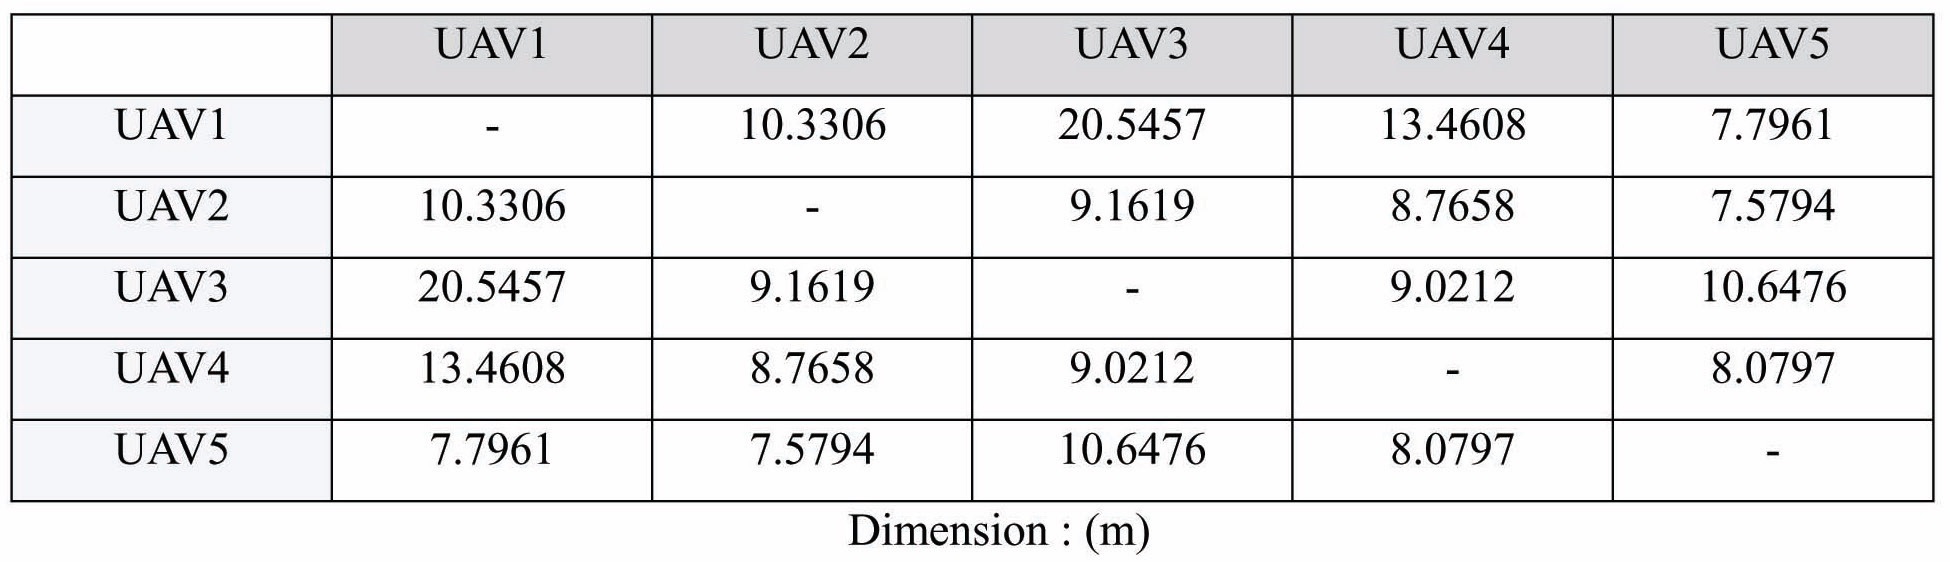 The minimum distances among all UAVs